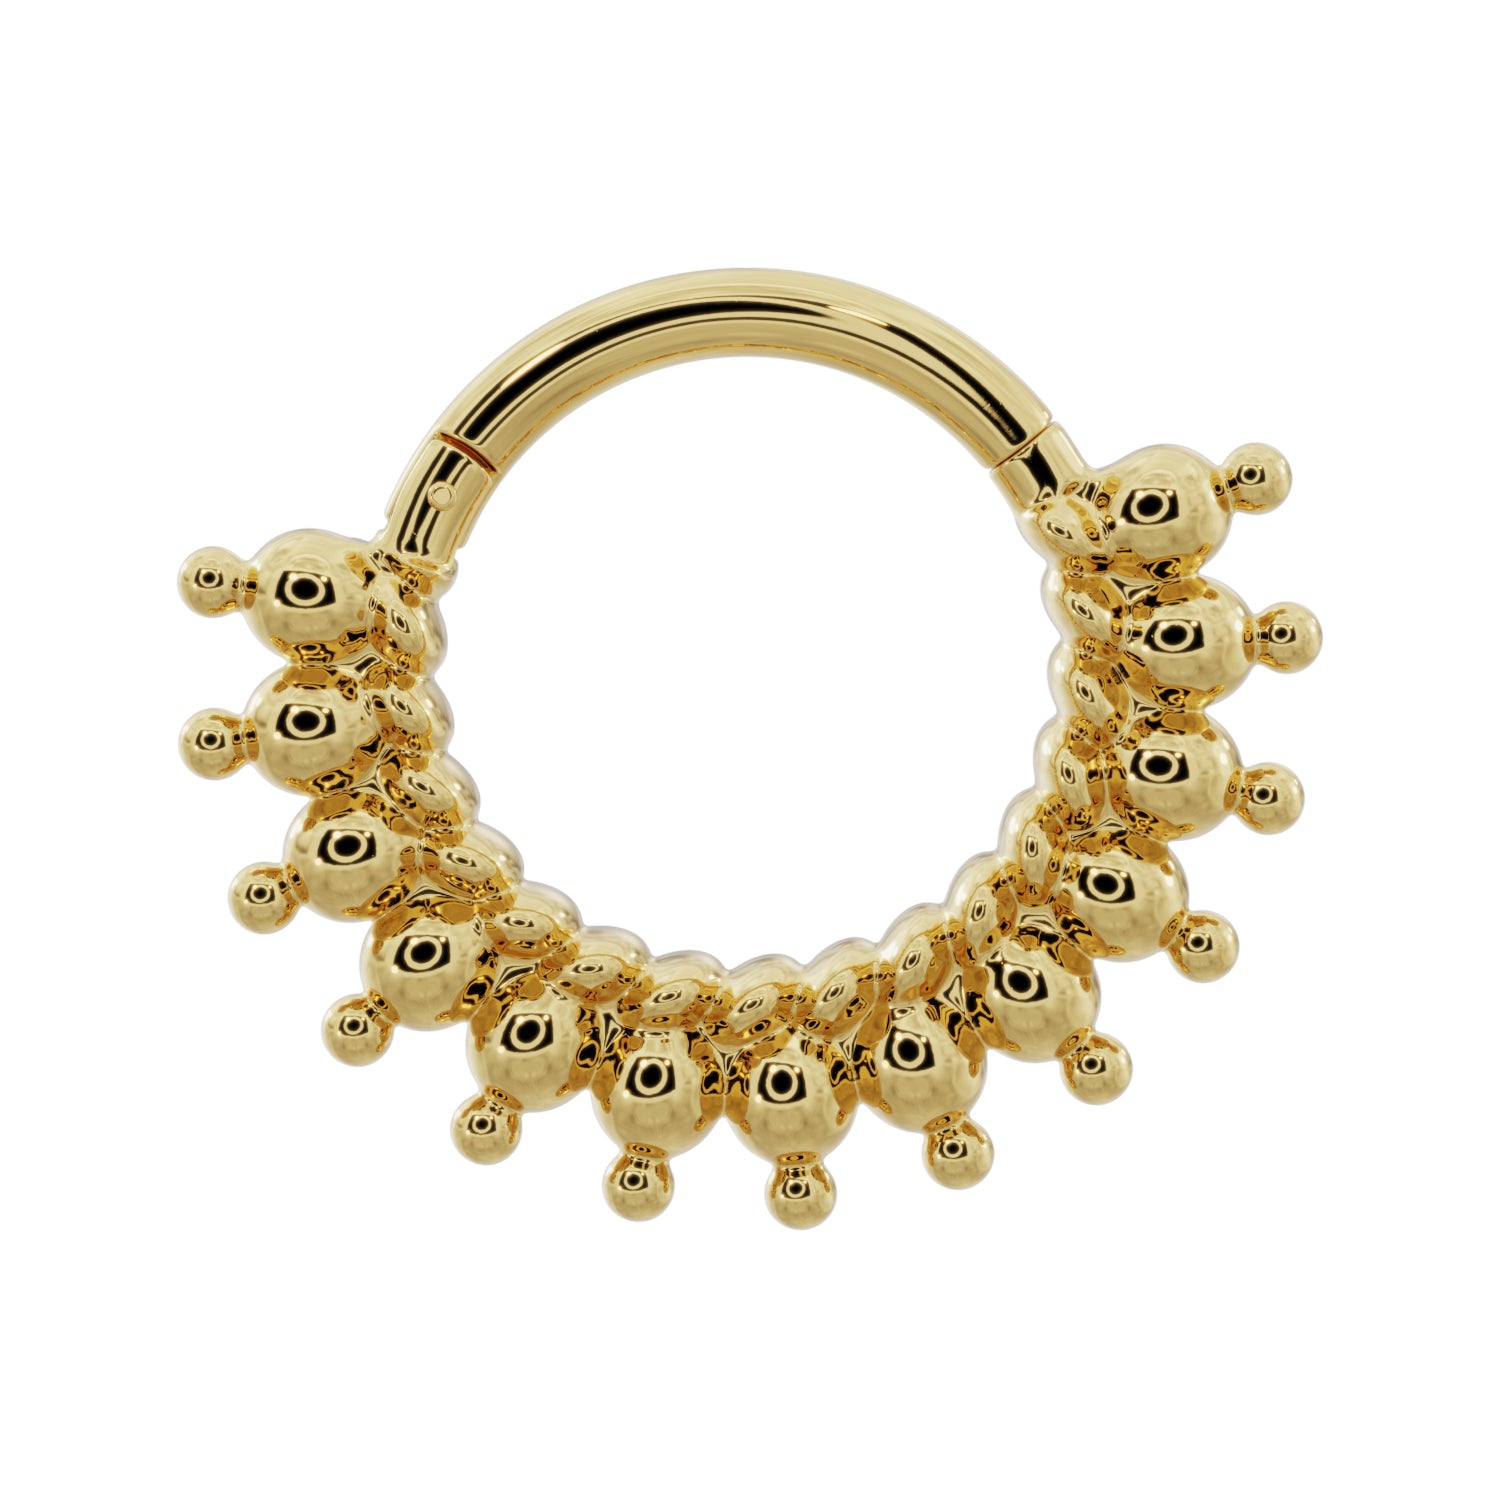 Shala Beads 14k Gold Clicker Ring Hoop-14K Yellow Gold   16G (1.2mm)   3 8